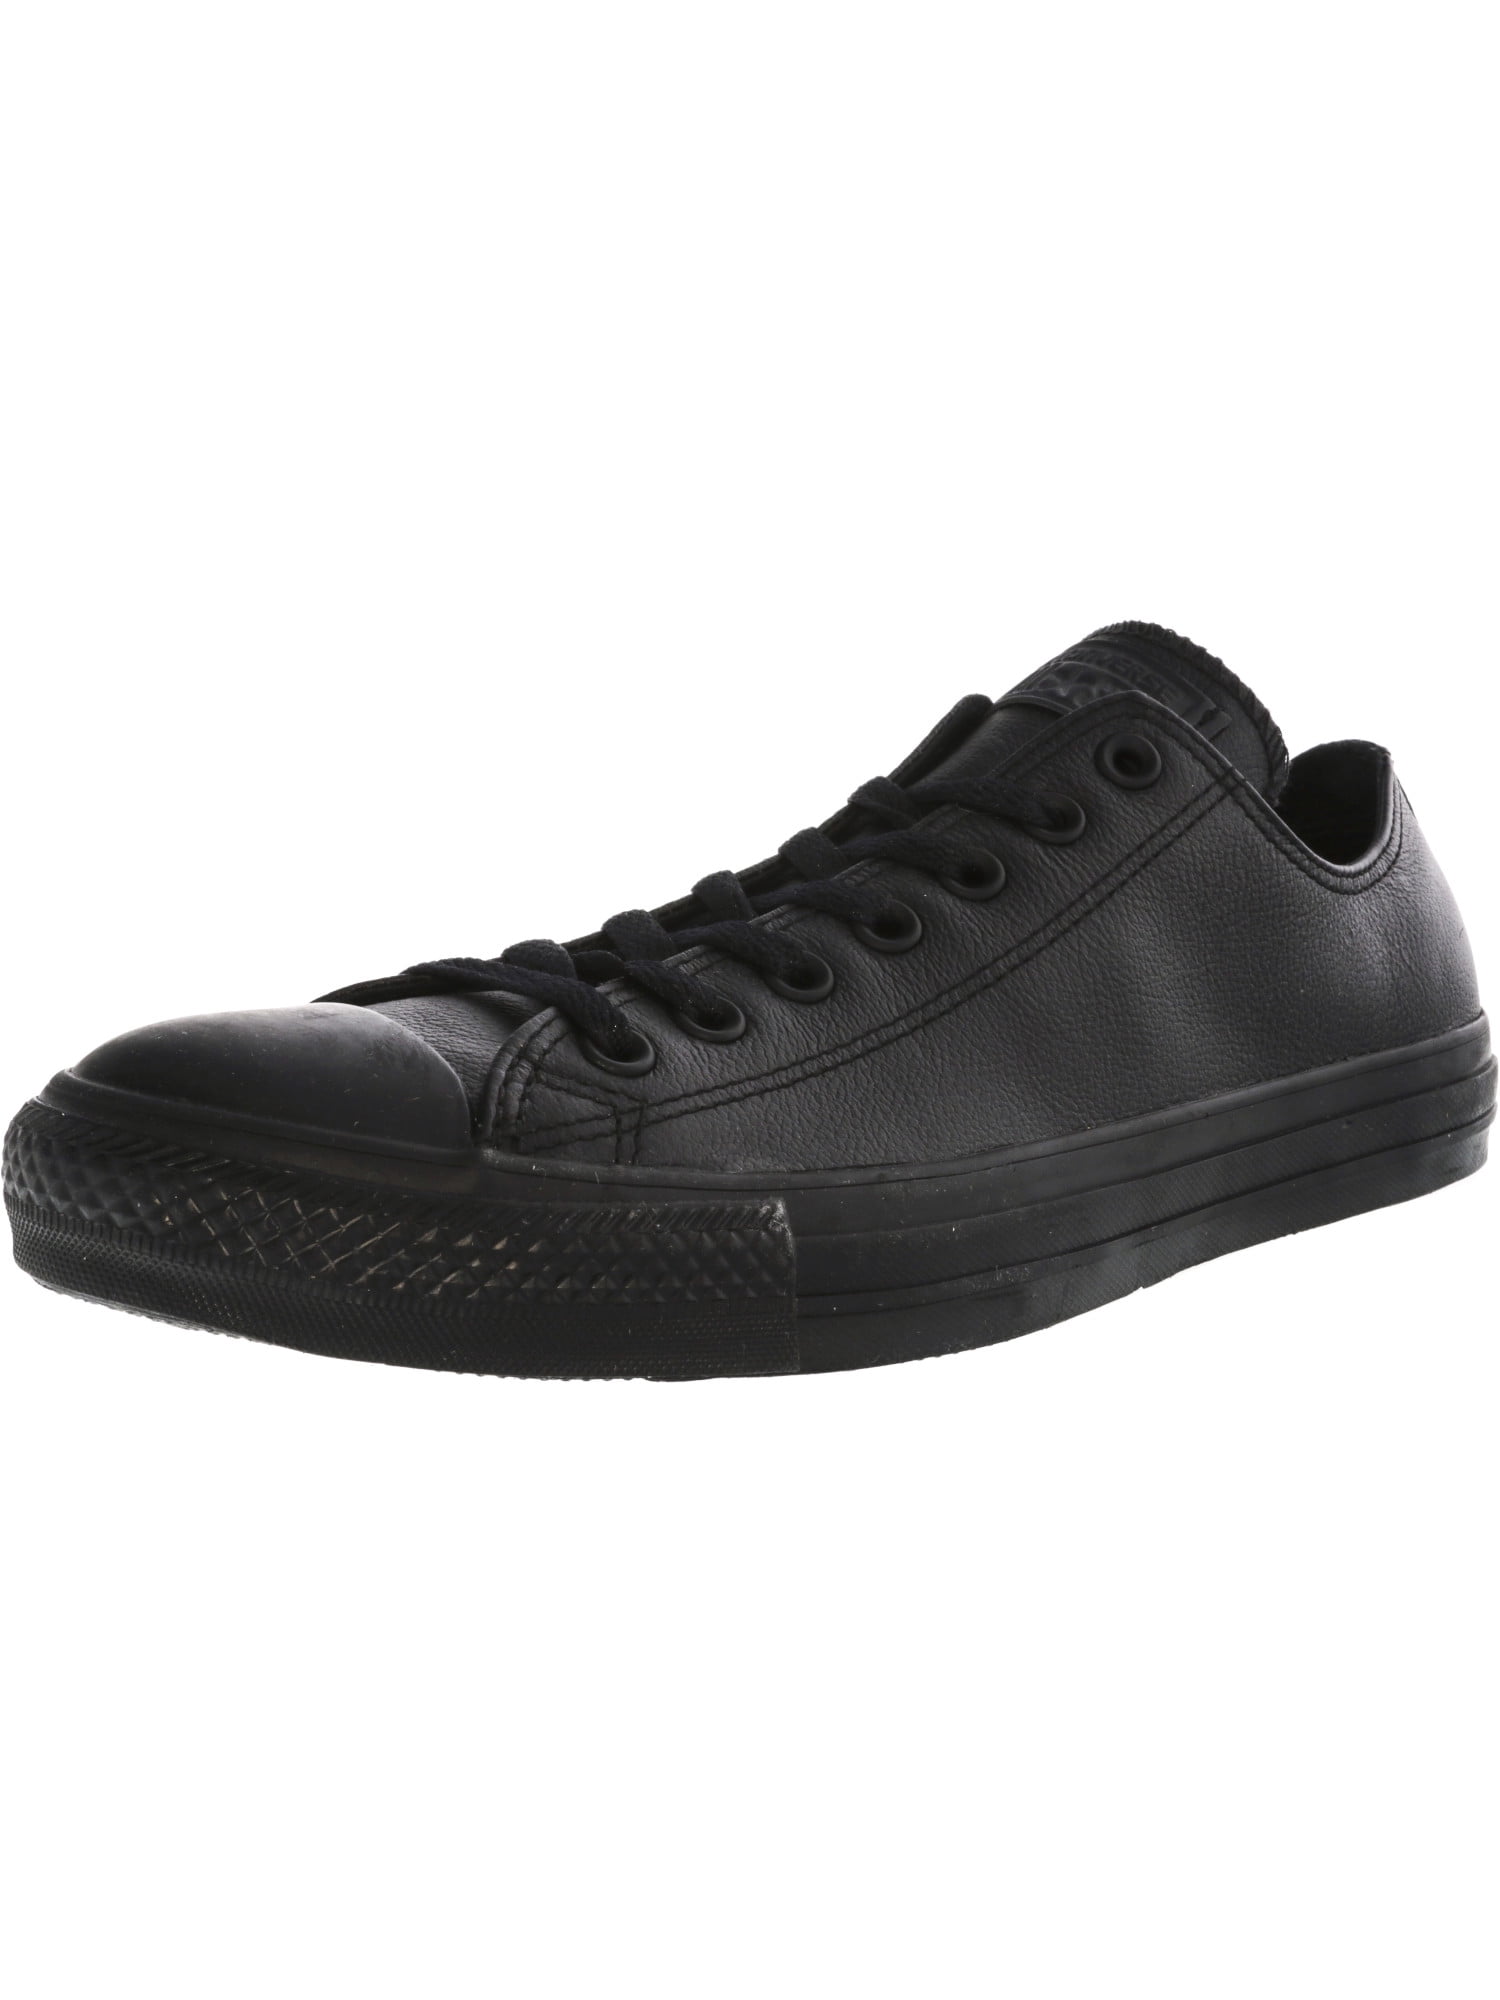 Converse Chuck Taylor All Star Ox Black Monochrome Ankle-High Fashion  Sneaker - 12M / 10M 